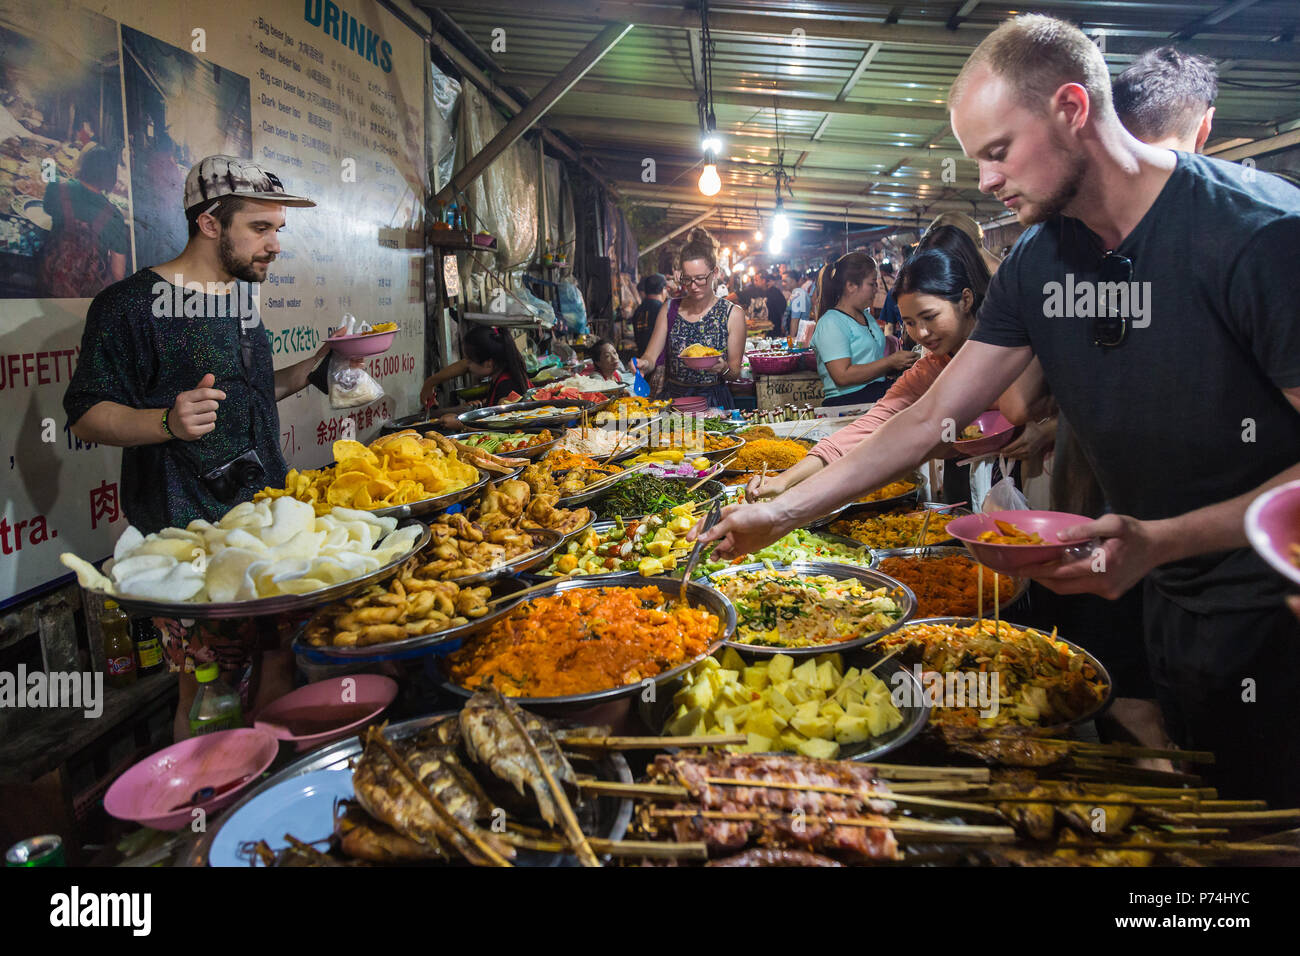 LUANG PRABANG, LAOS - 28 JUNE 2018 - People enjoy selecting food from the vegetarian buffet selection in Luang Prabang night market on June 28, 2018 i Stock Photo